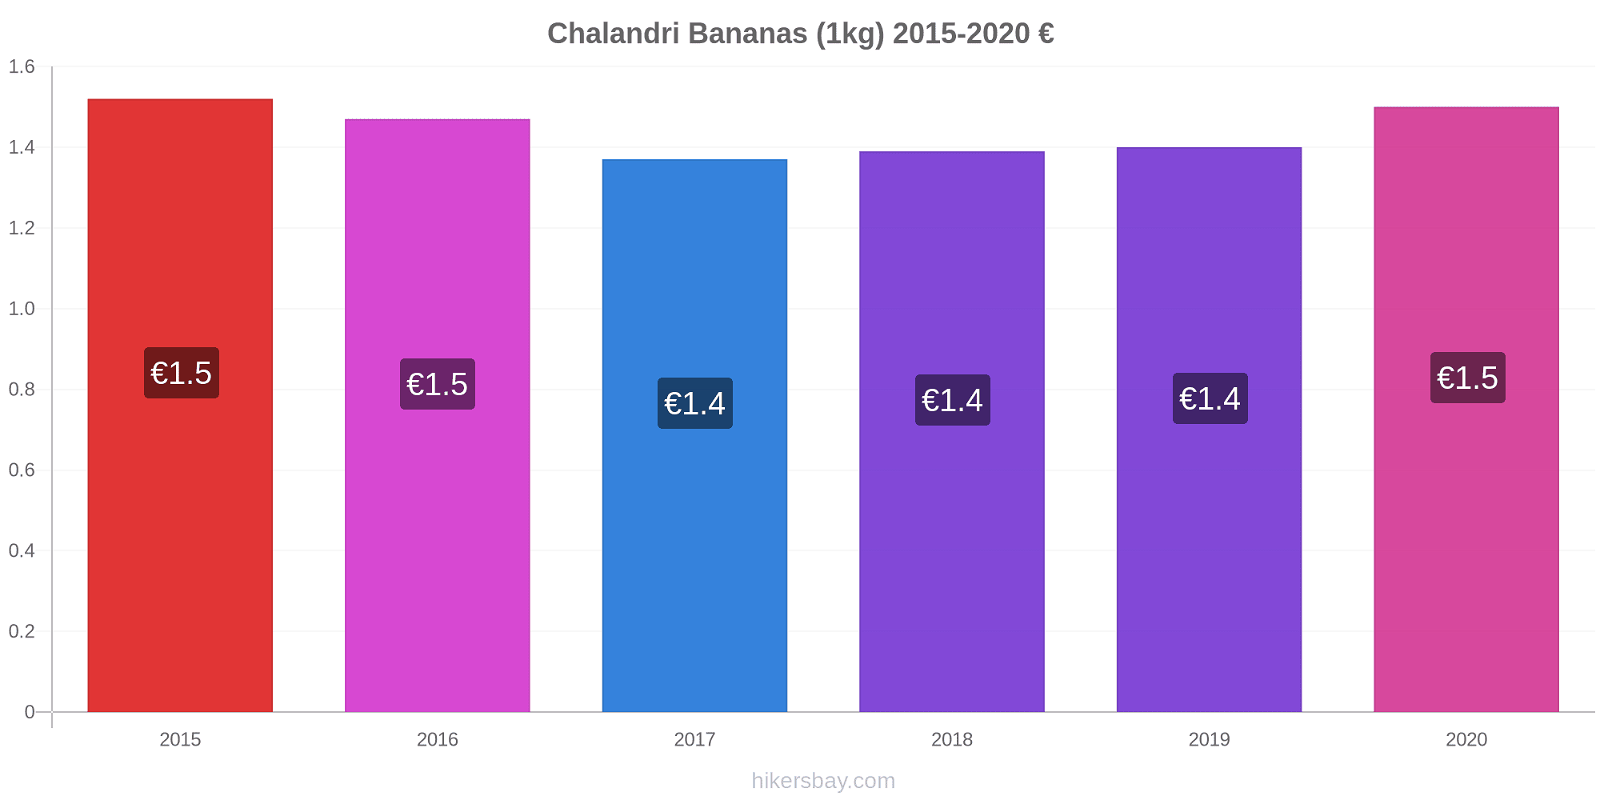 Chalandri price changes Bananas (1kg) hikersbay.com